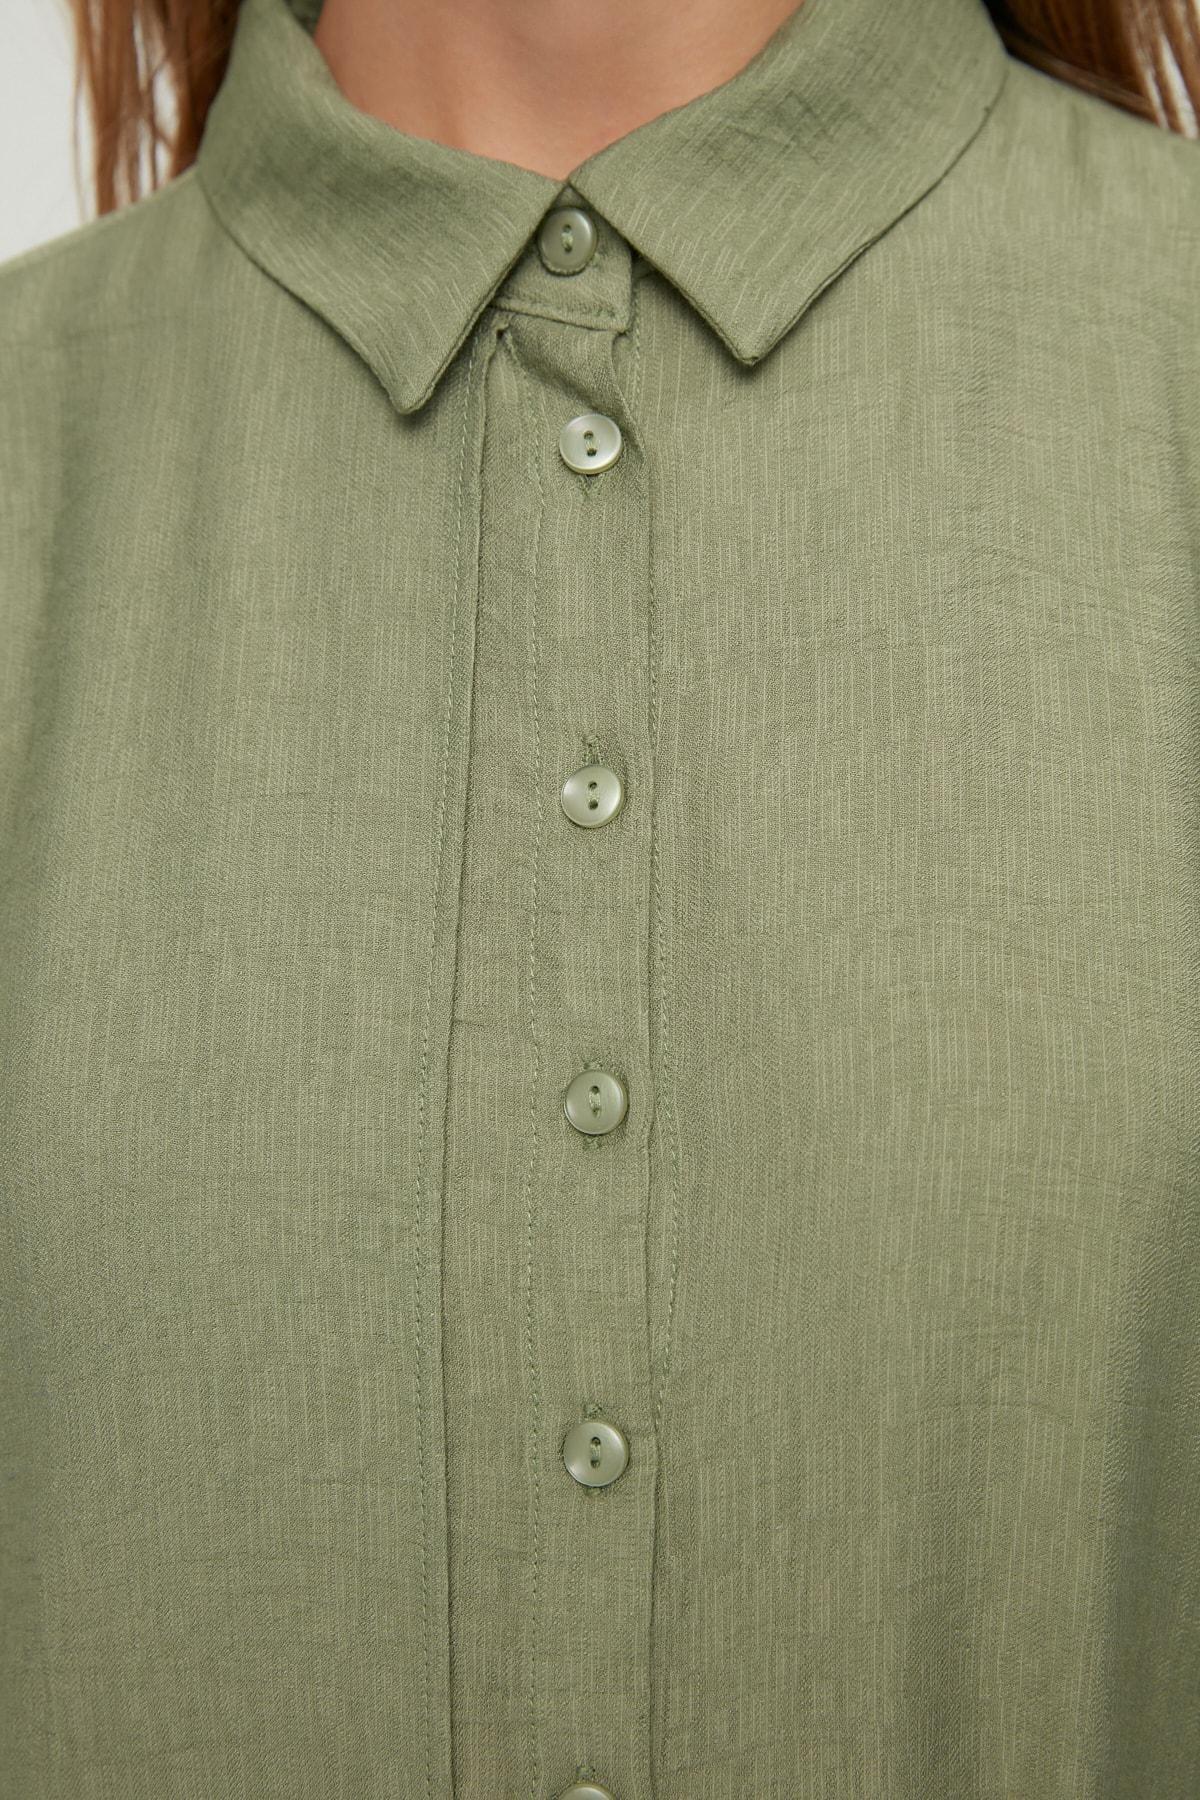 Trendyol - Green Shirt Dress